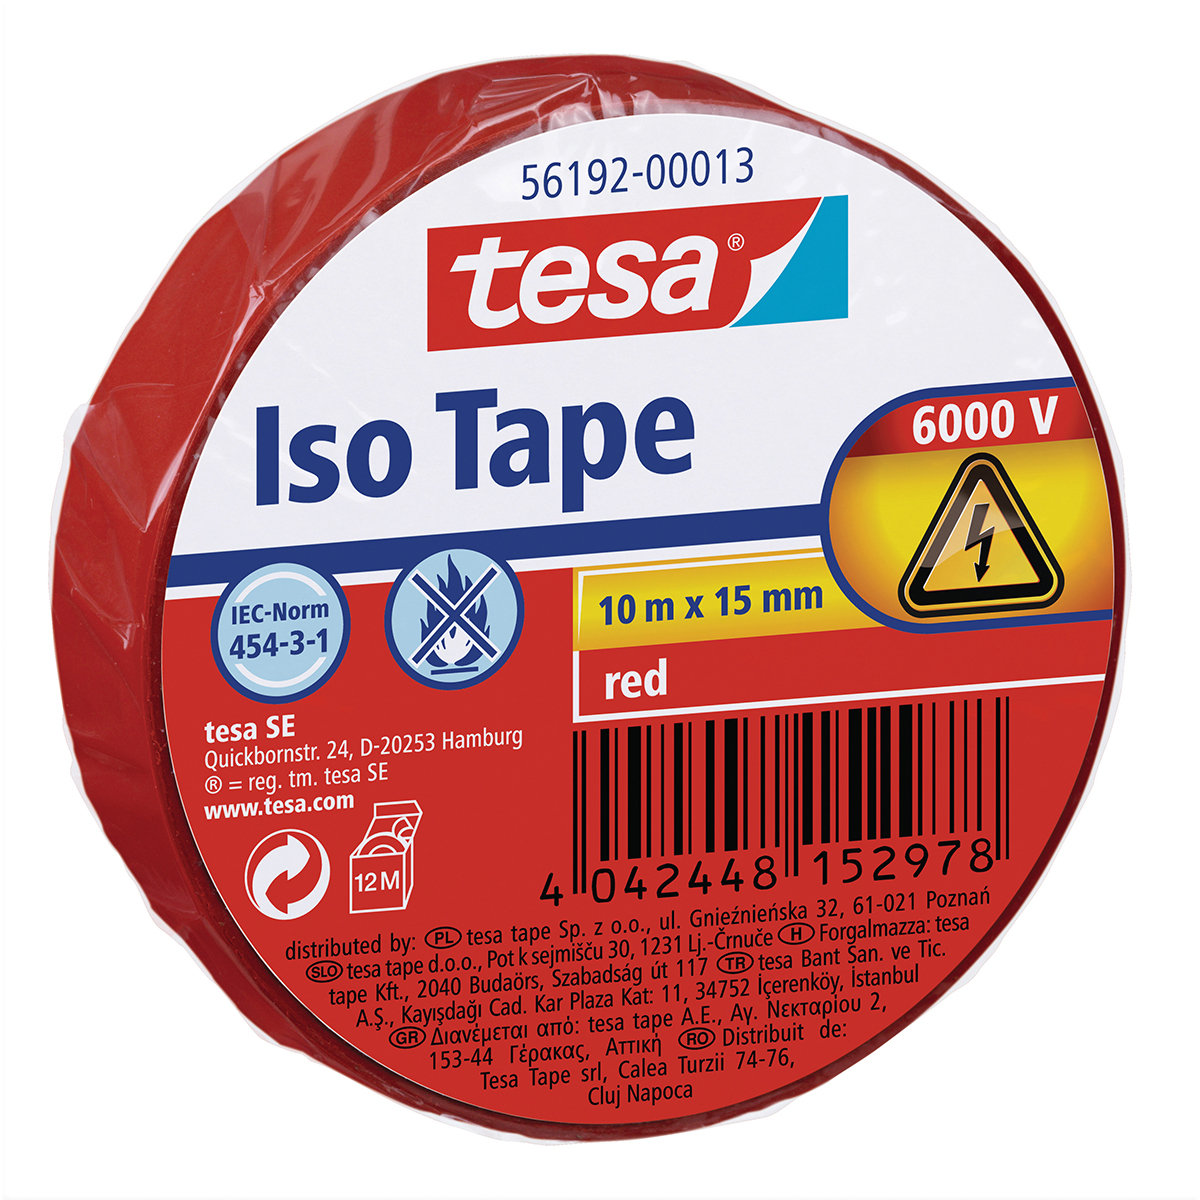 tesa insulation tape 10m x 15mm Red